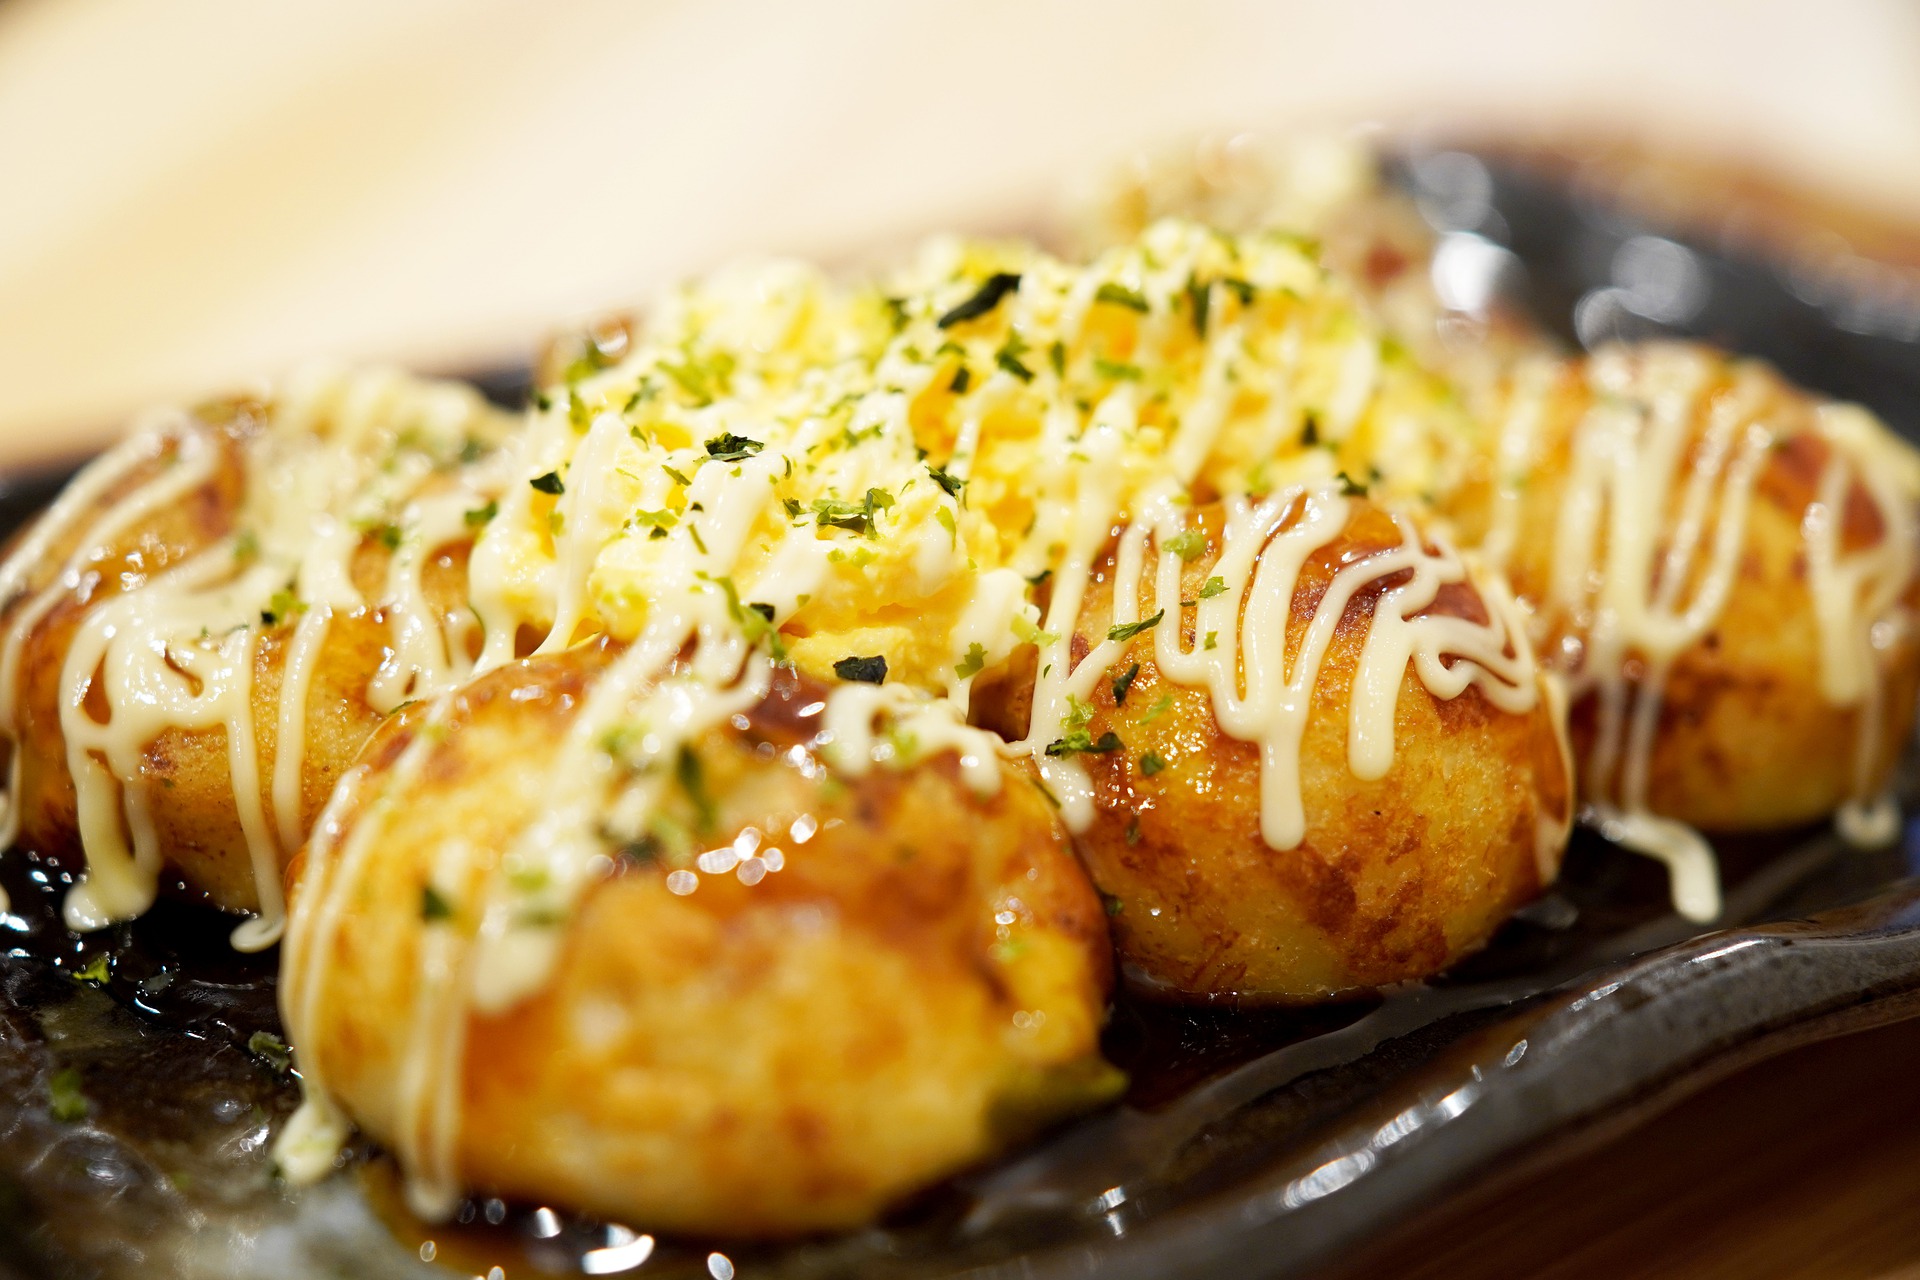 Delicious Takoyaki – Japan's Octopus Ball Snack That's Too Good To